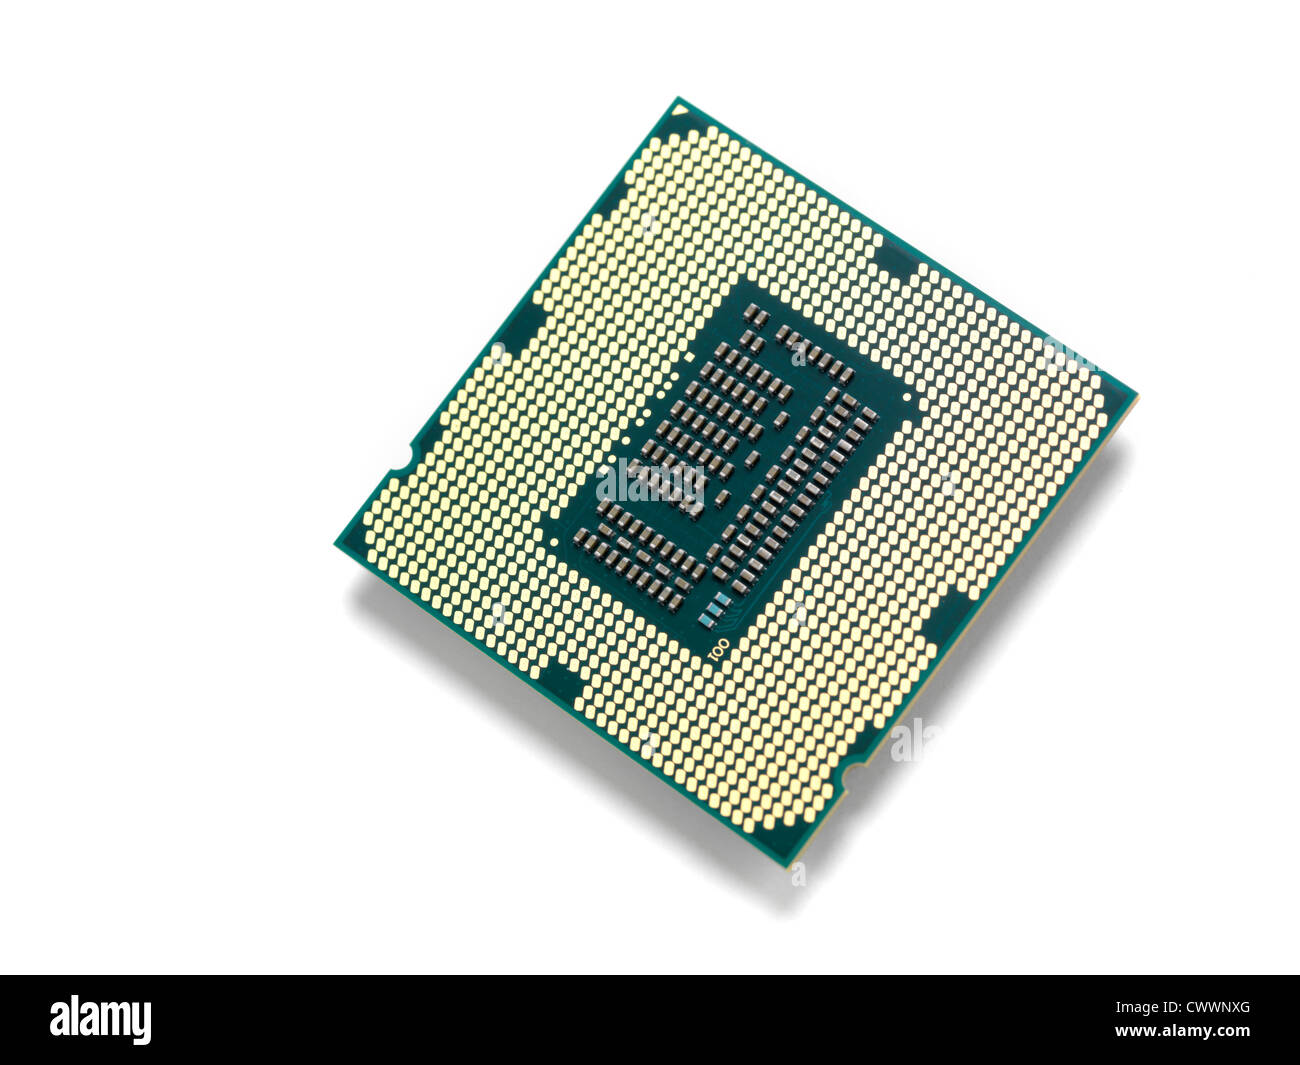 Intel i7 3770K processor with LGA 1155 CPU socket isolated on white  background Stock Photo - Alamy